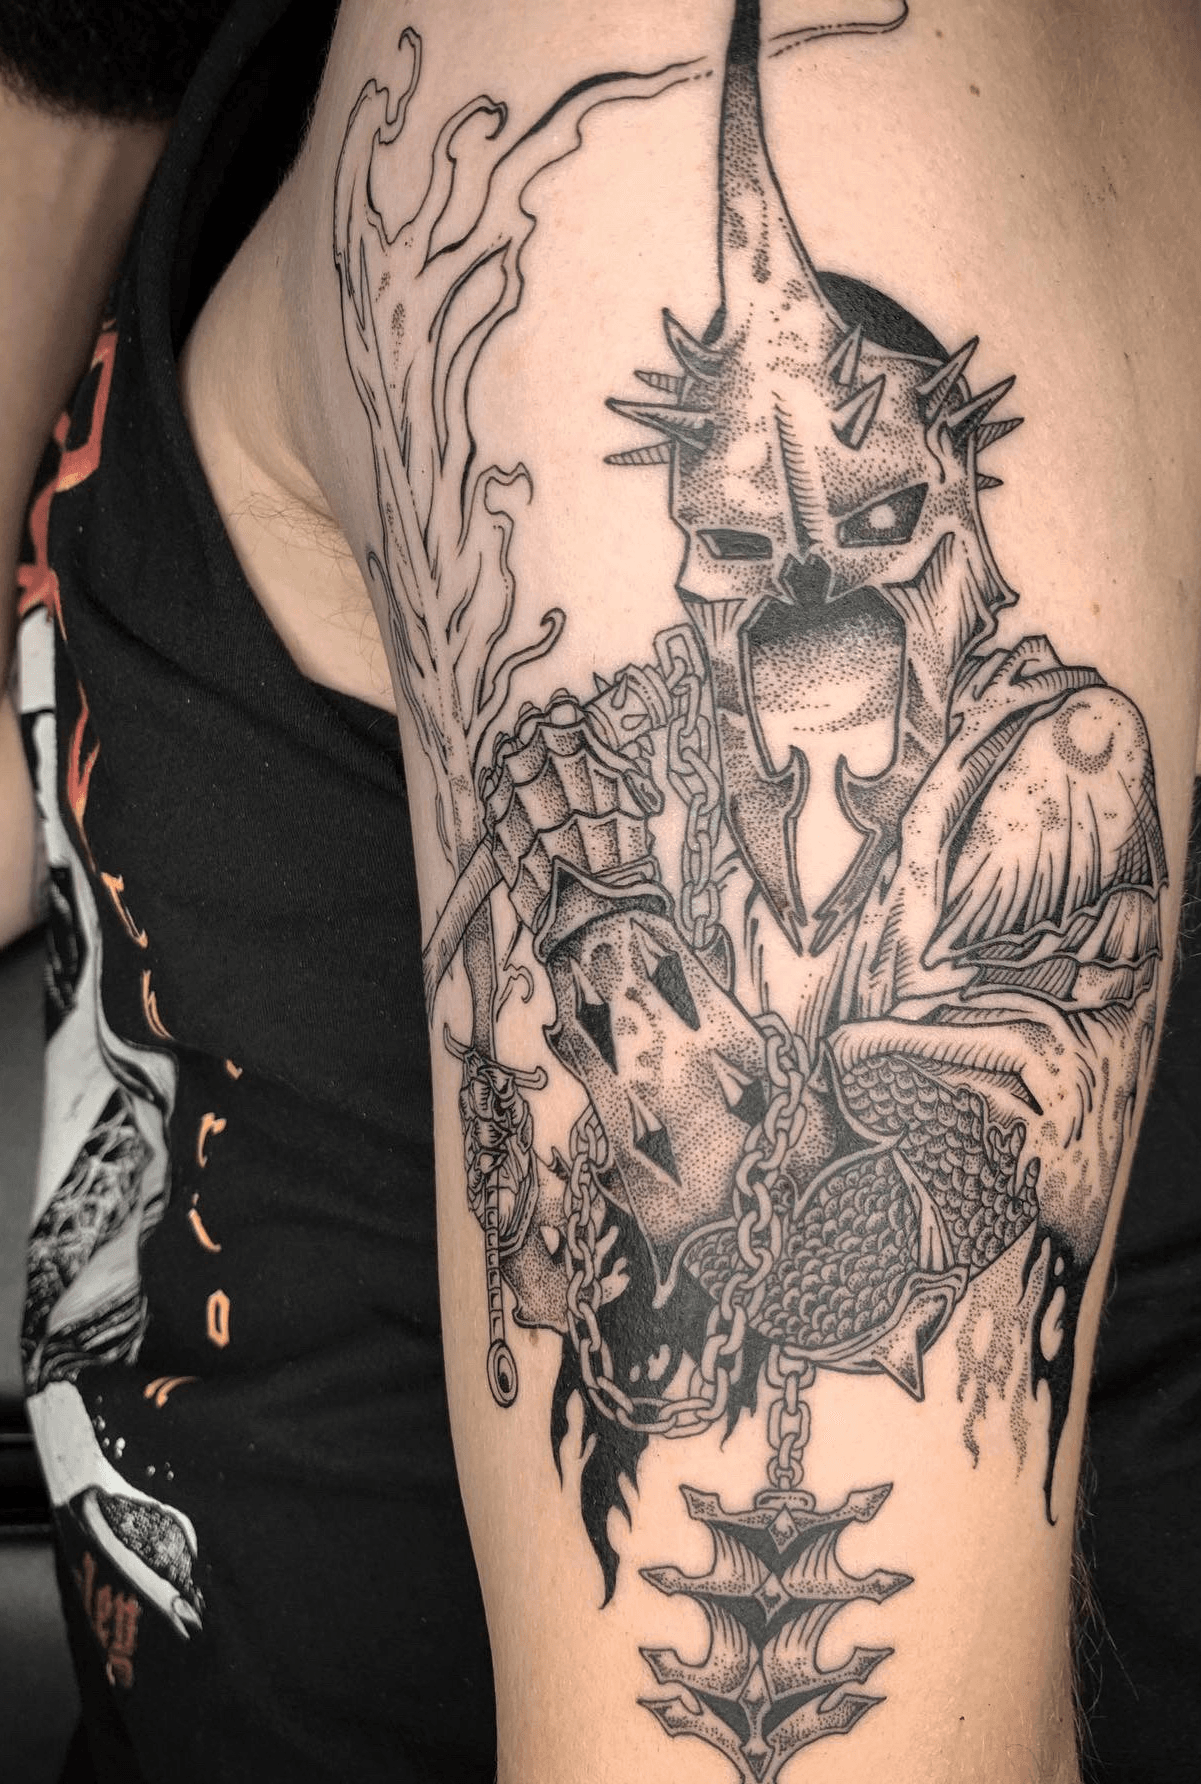 Felipe Santo Tattoos  Witch king  done at newblackstudio  Facebook